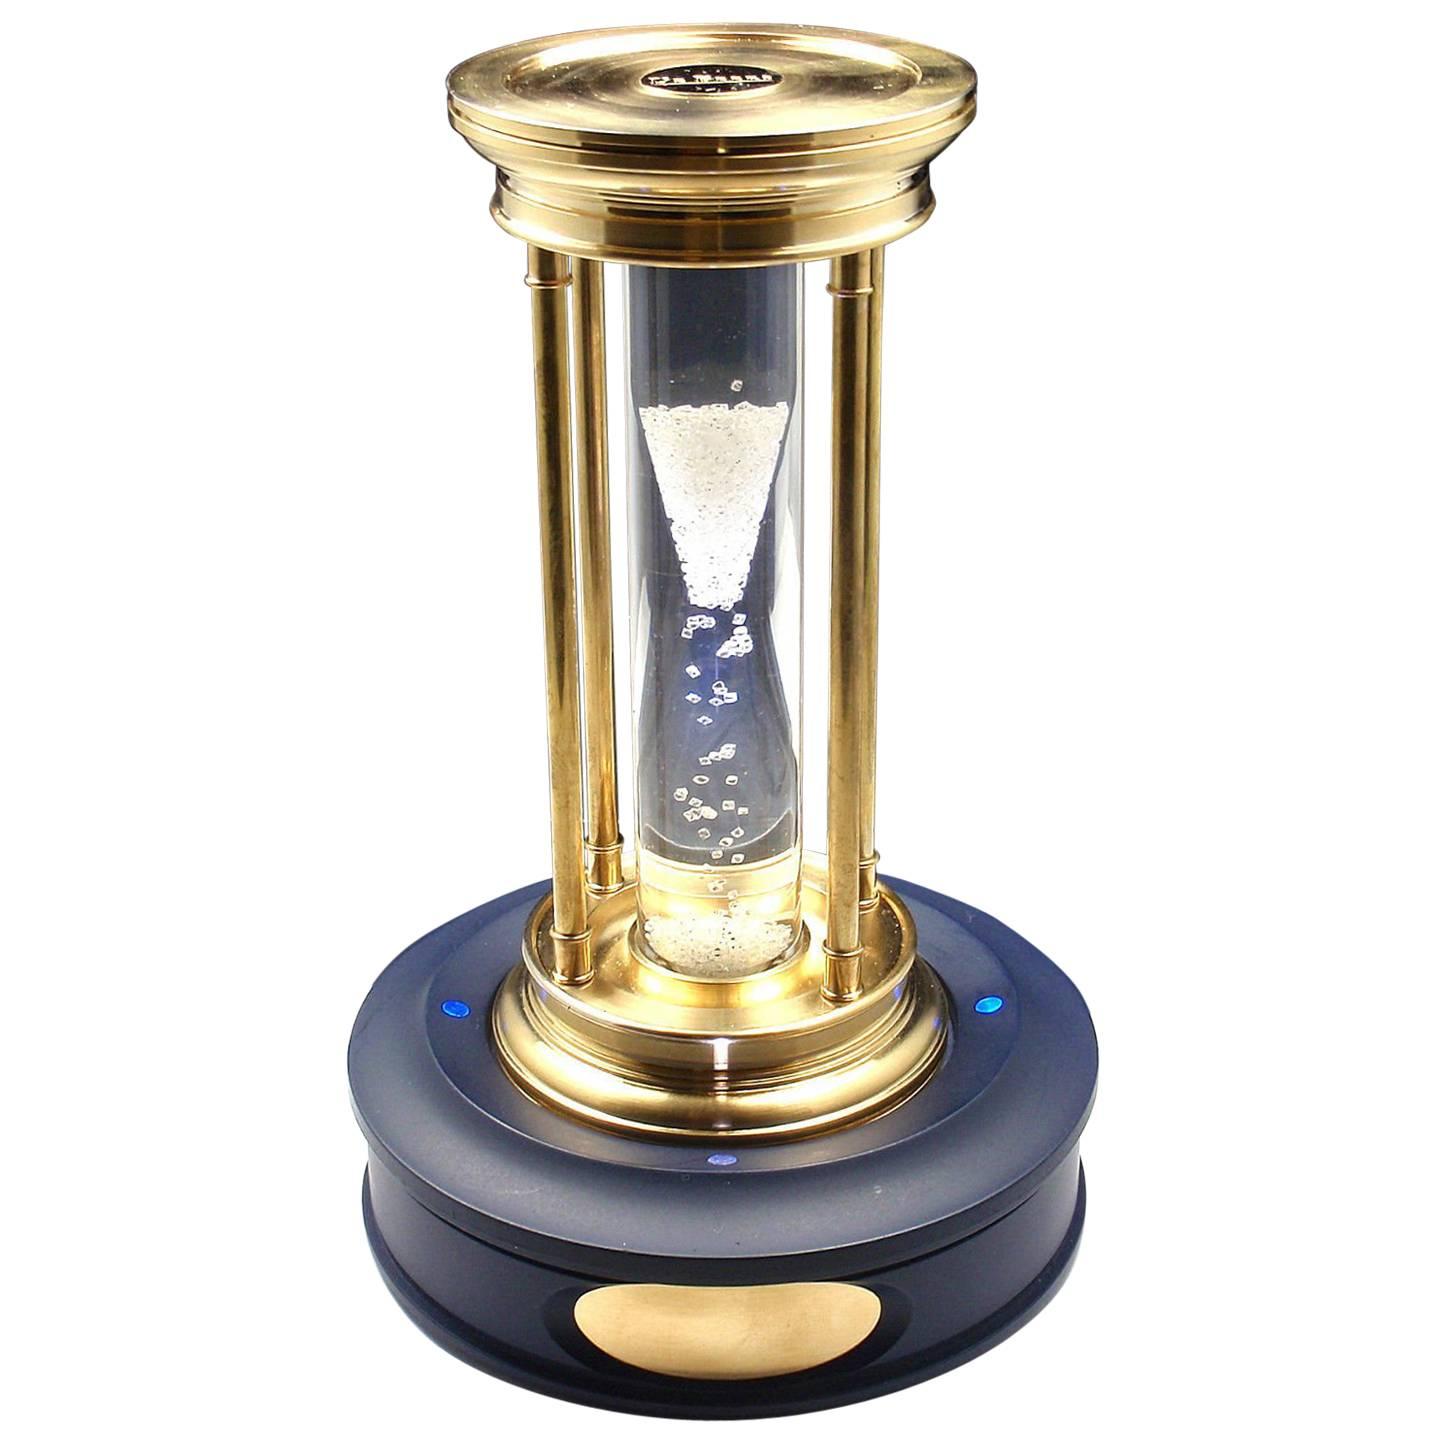 De Beers Limited Edition Millennium 2000 Diamond Brass Hourglass Timer